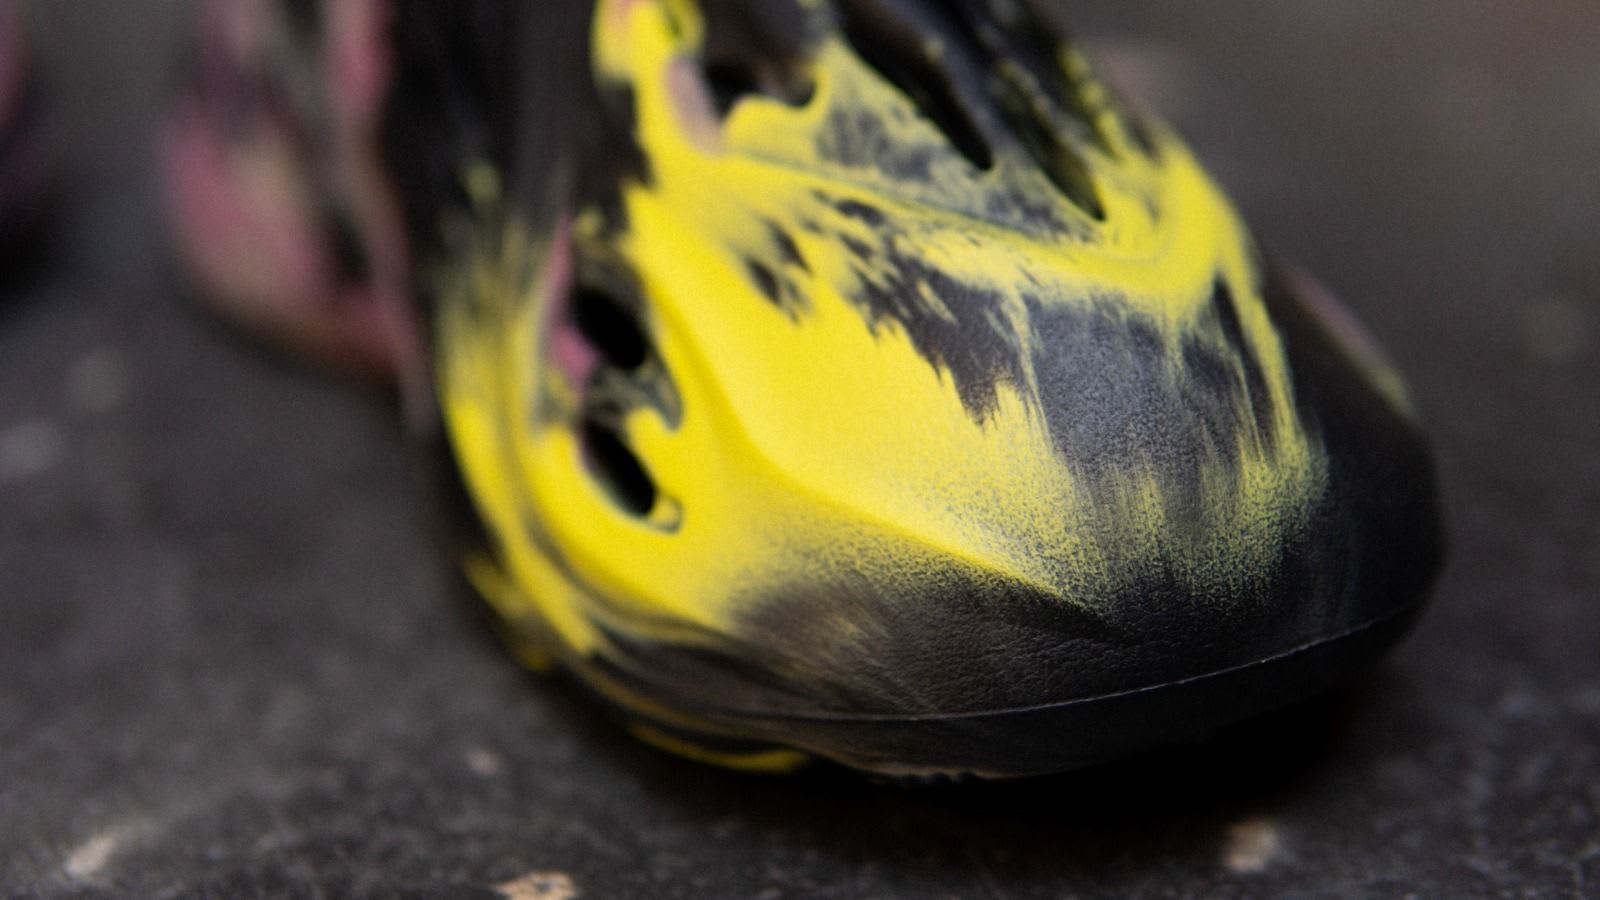 Adidas Yeezy Foam Runner 'MX Carbon' Toe